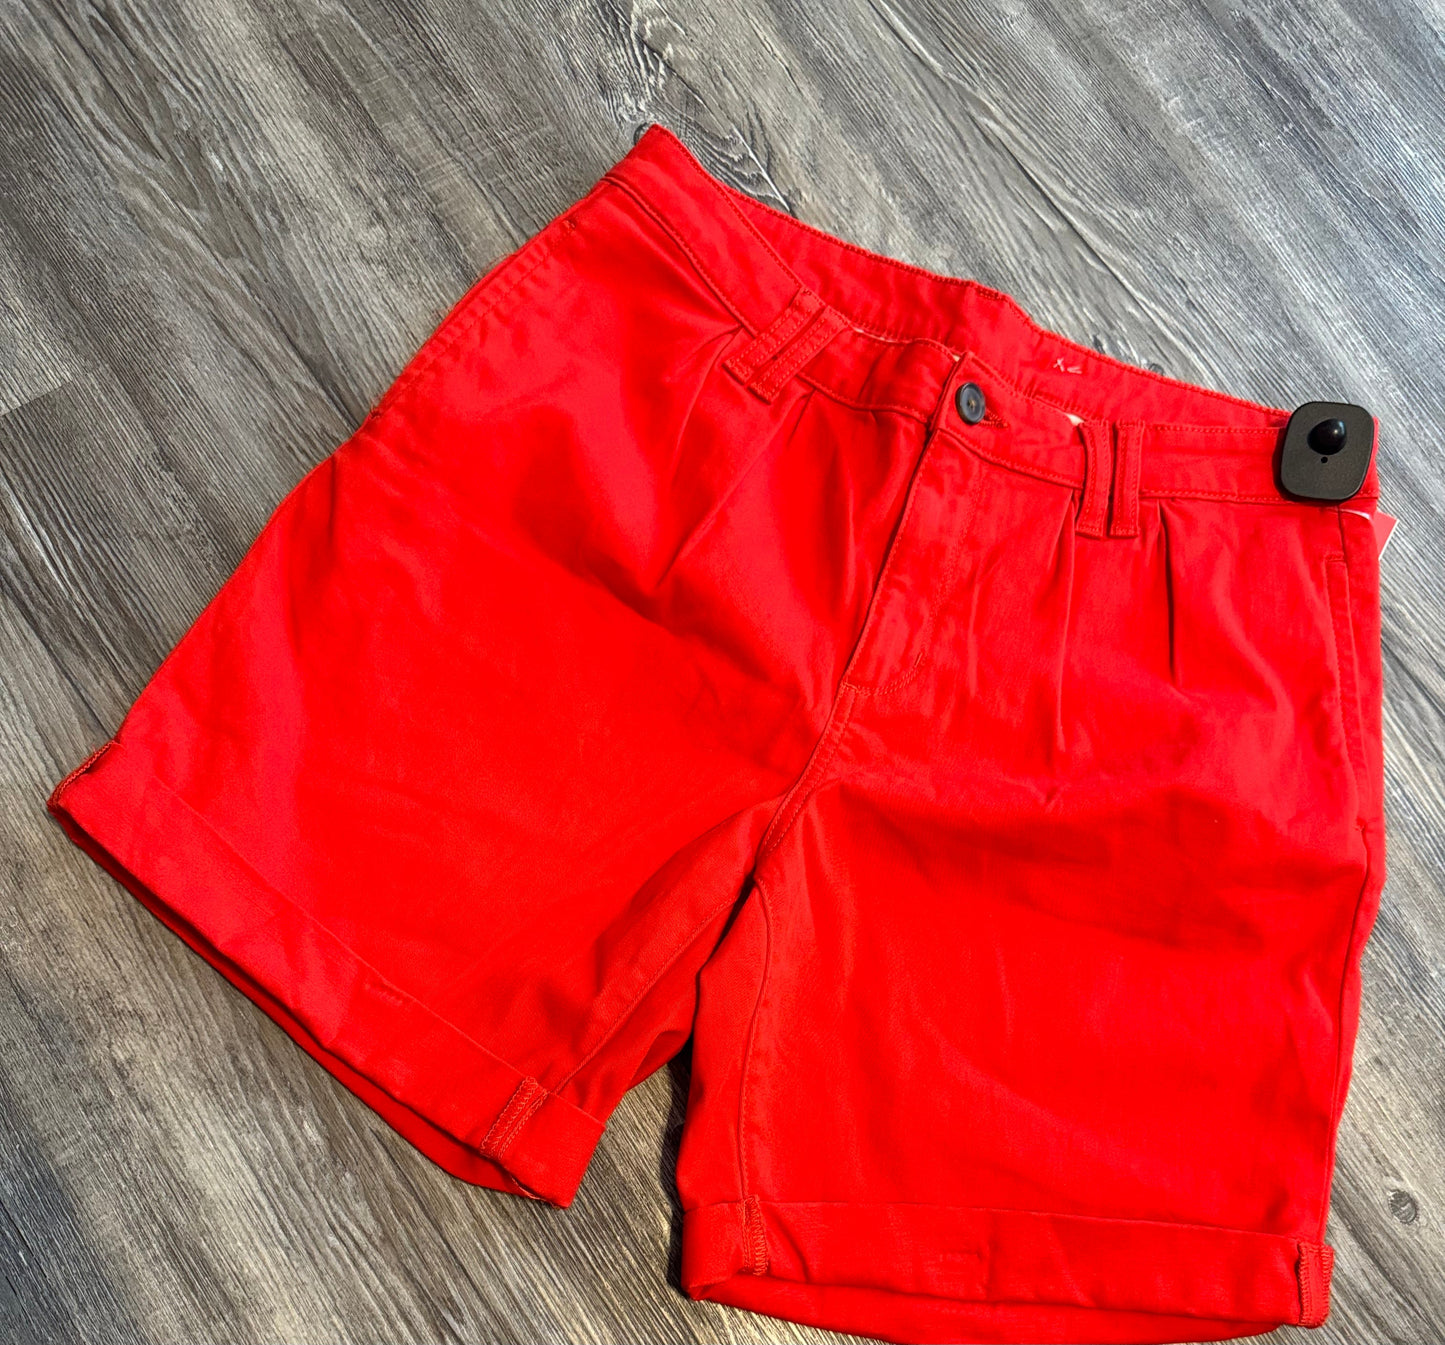 Shorts By St Johns Bay  Size: 10